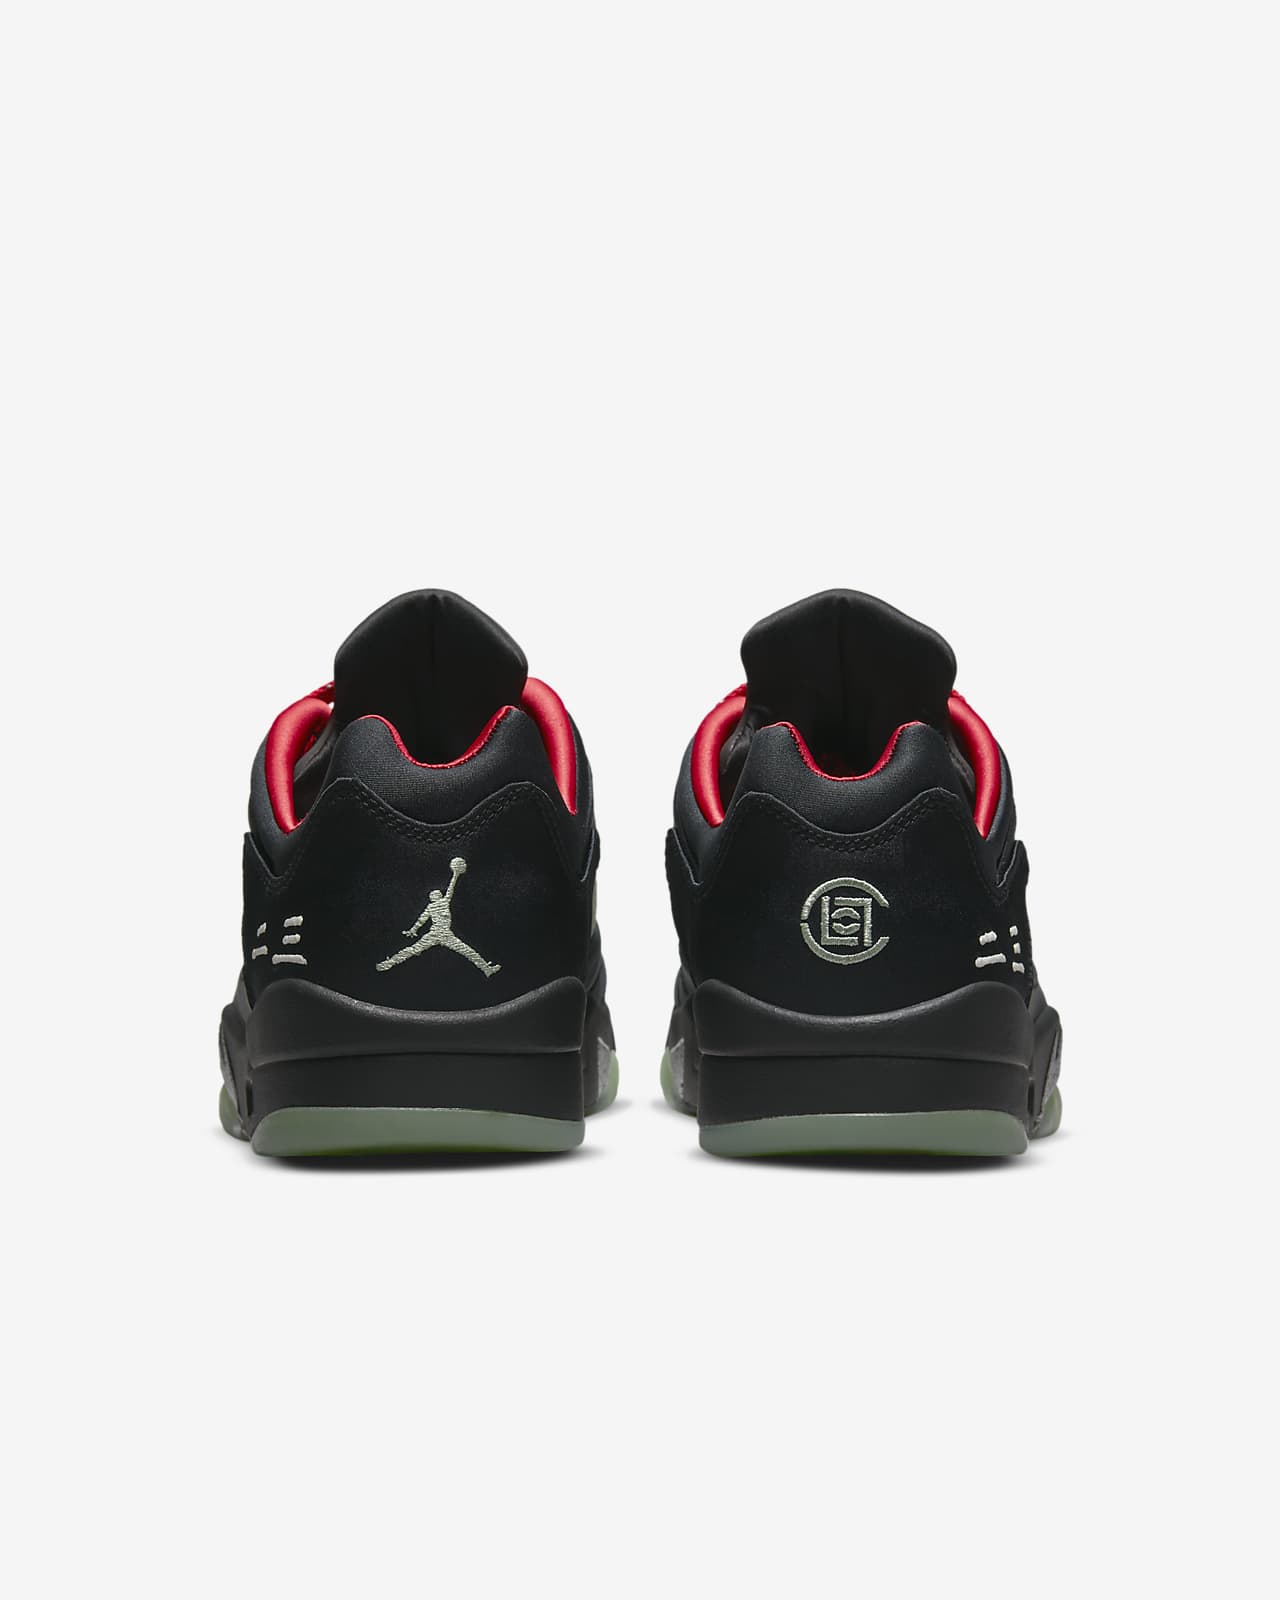 Distributie maag nationale vlag Air Jordan 5 Retro Low SP Shoes. Nike JP